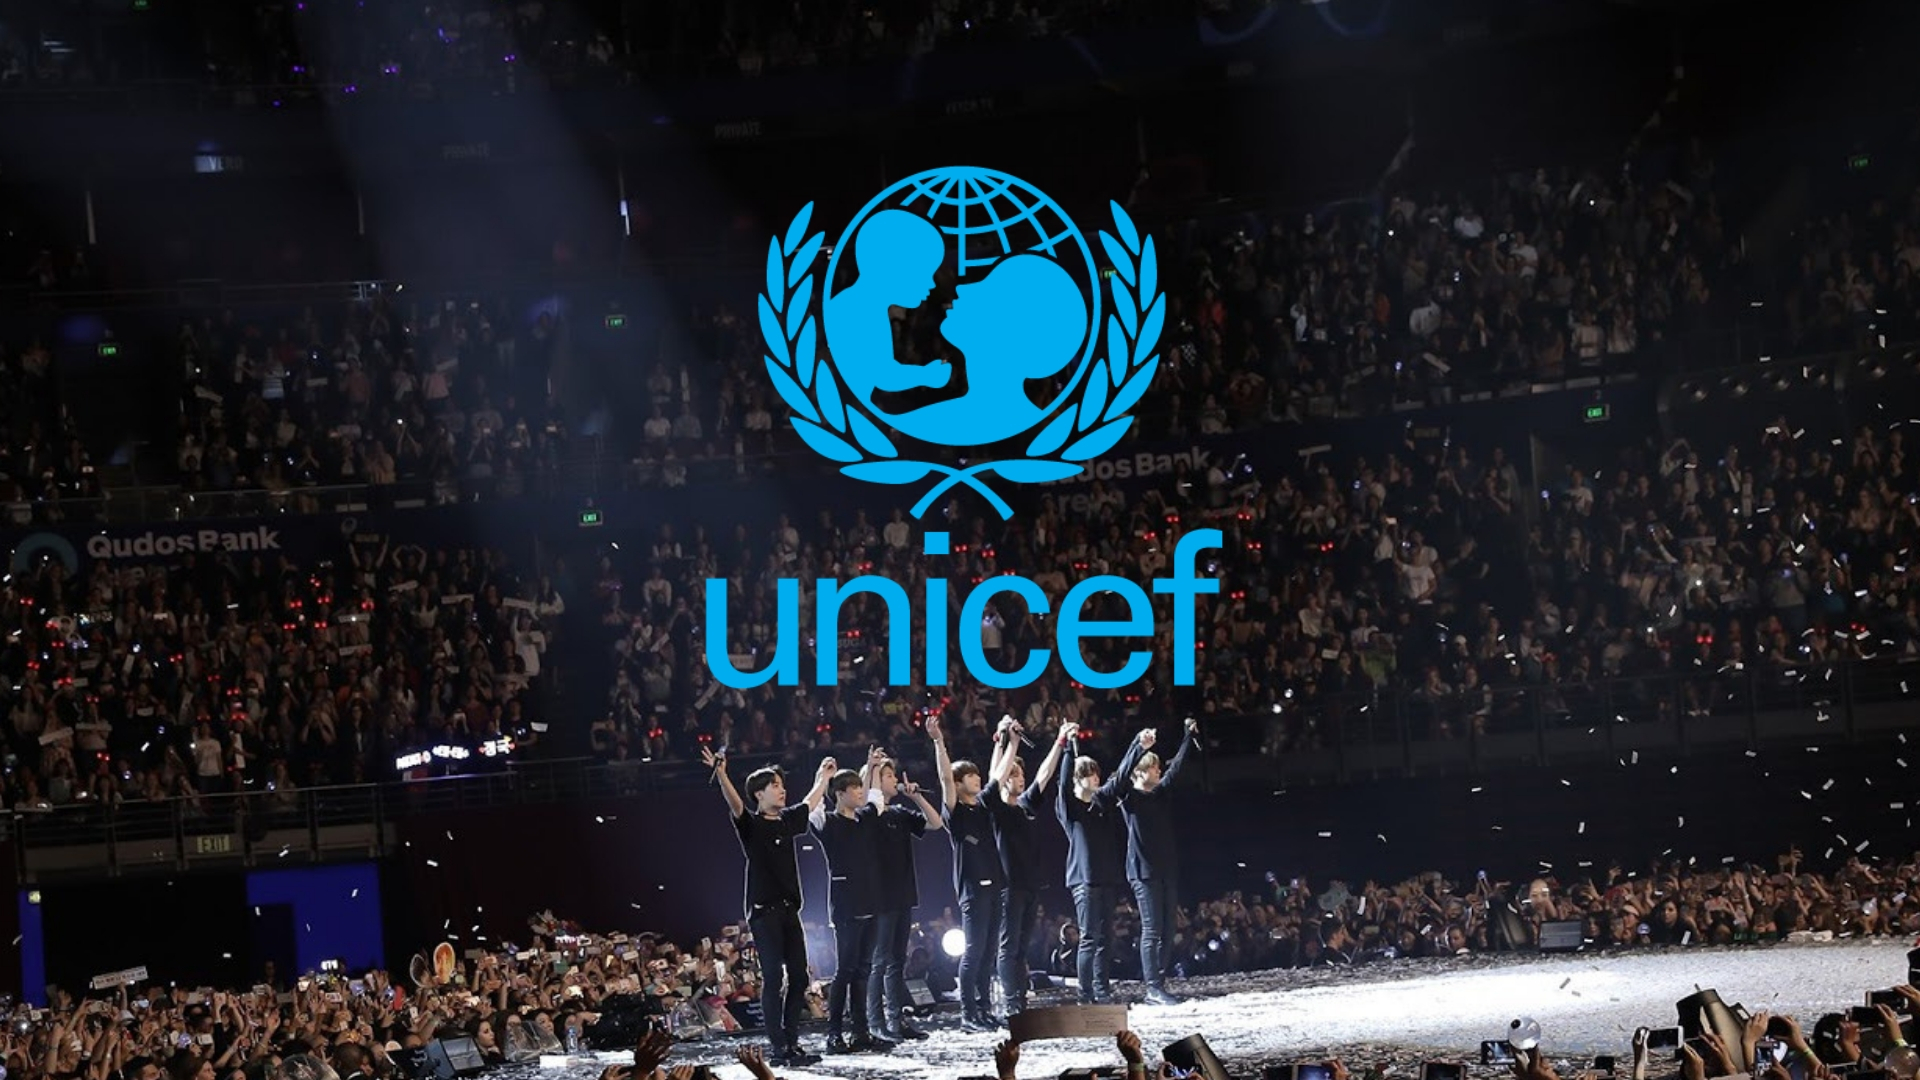 UNICEF – One crash, one global storm of activity